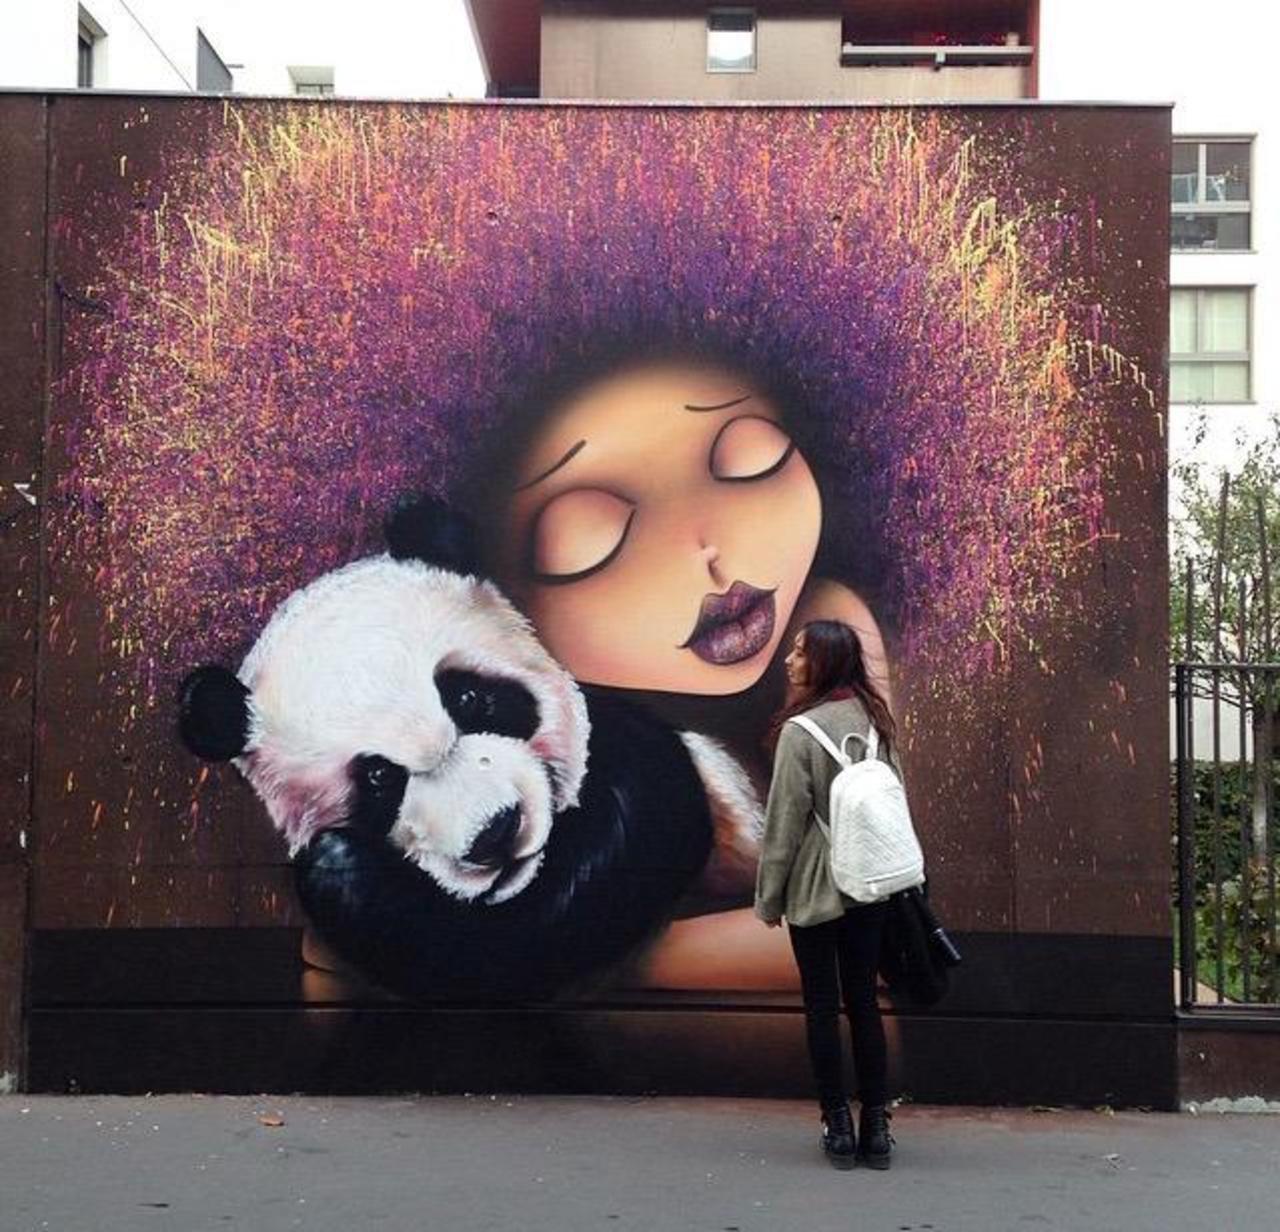 Street Art by VinieGraffiti in Paris 

#art #graffiti #mural #streetart http://t.co/61NQ23PIFS